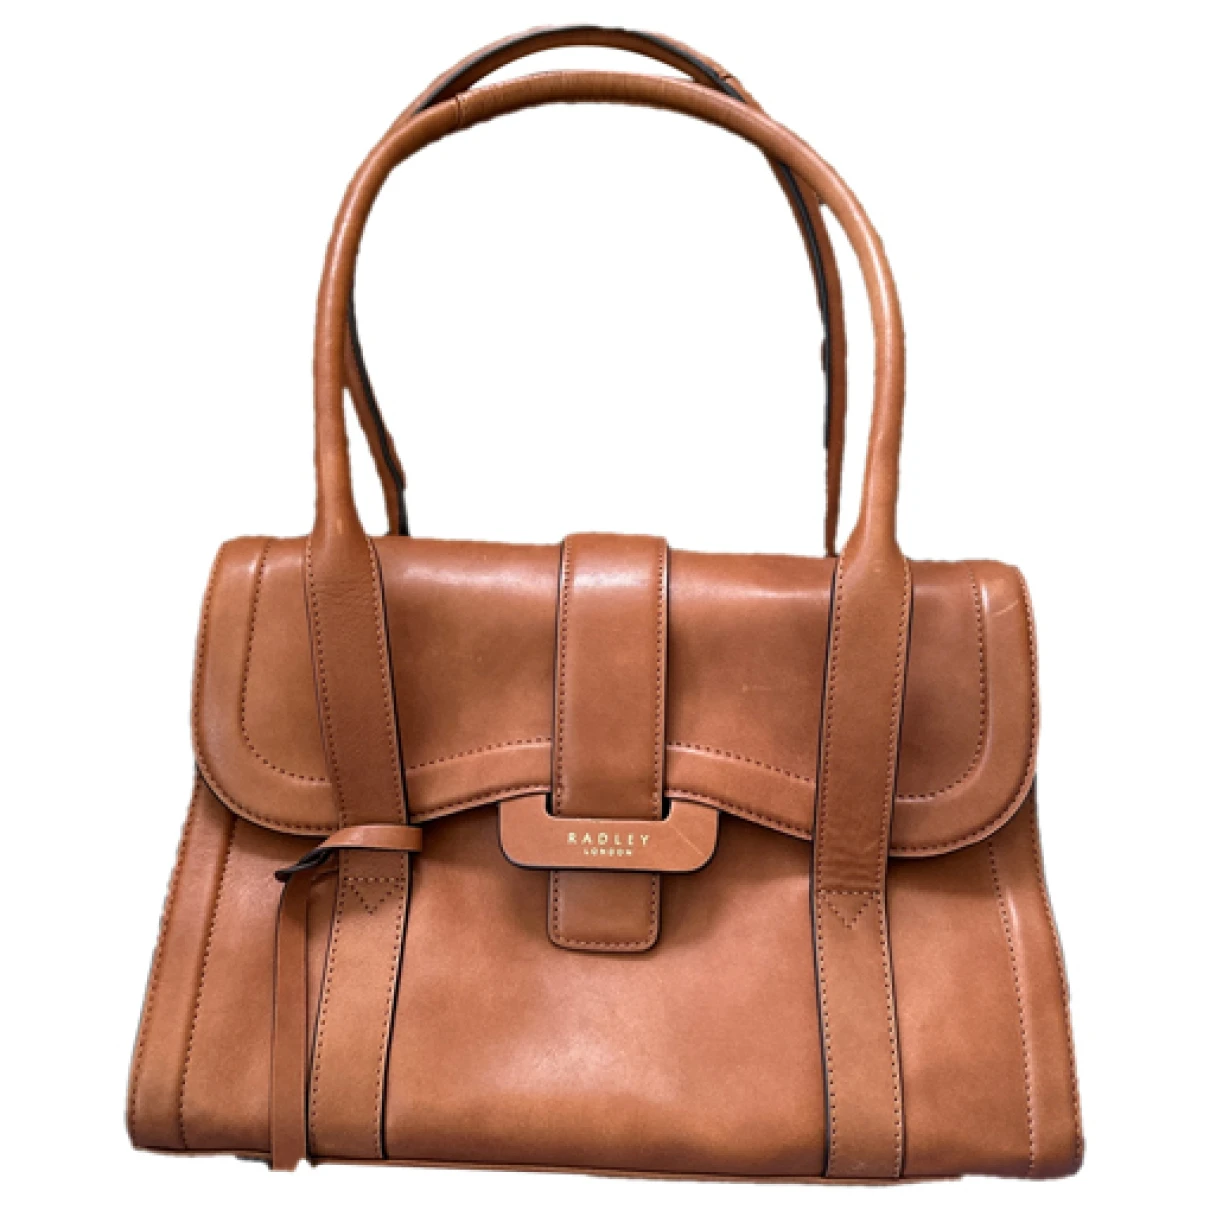 Pre-owned Radley London Leather Handbag In Camel